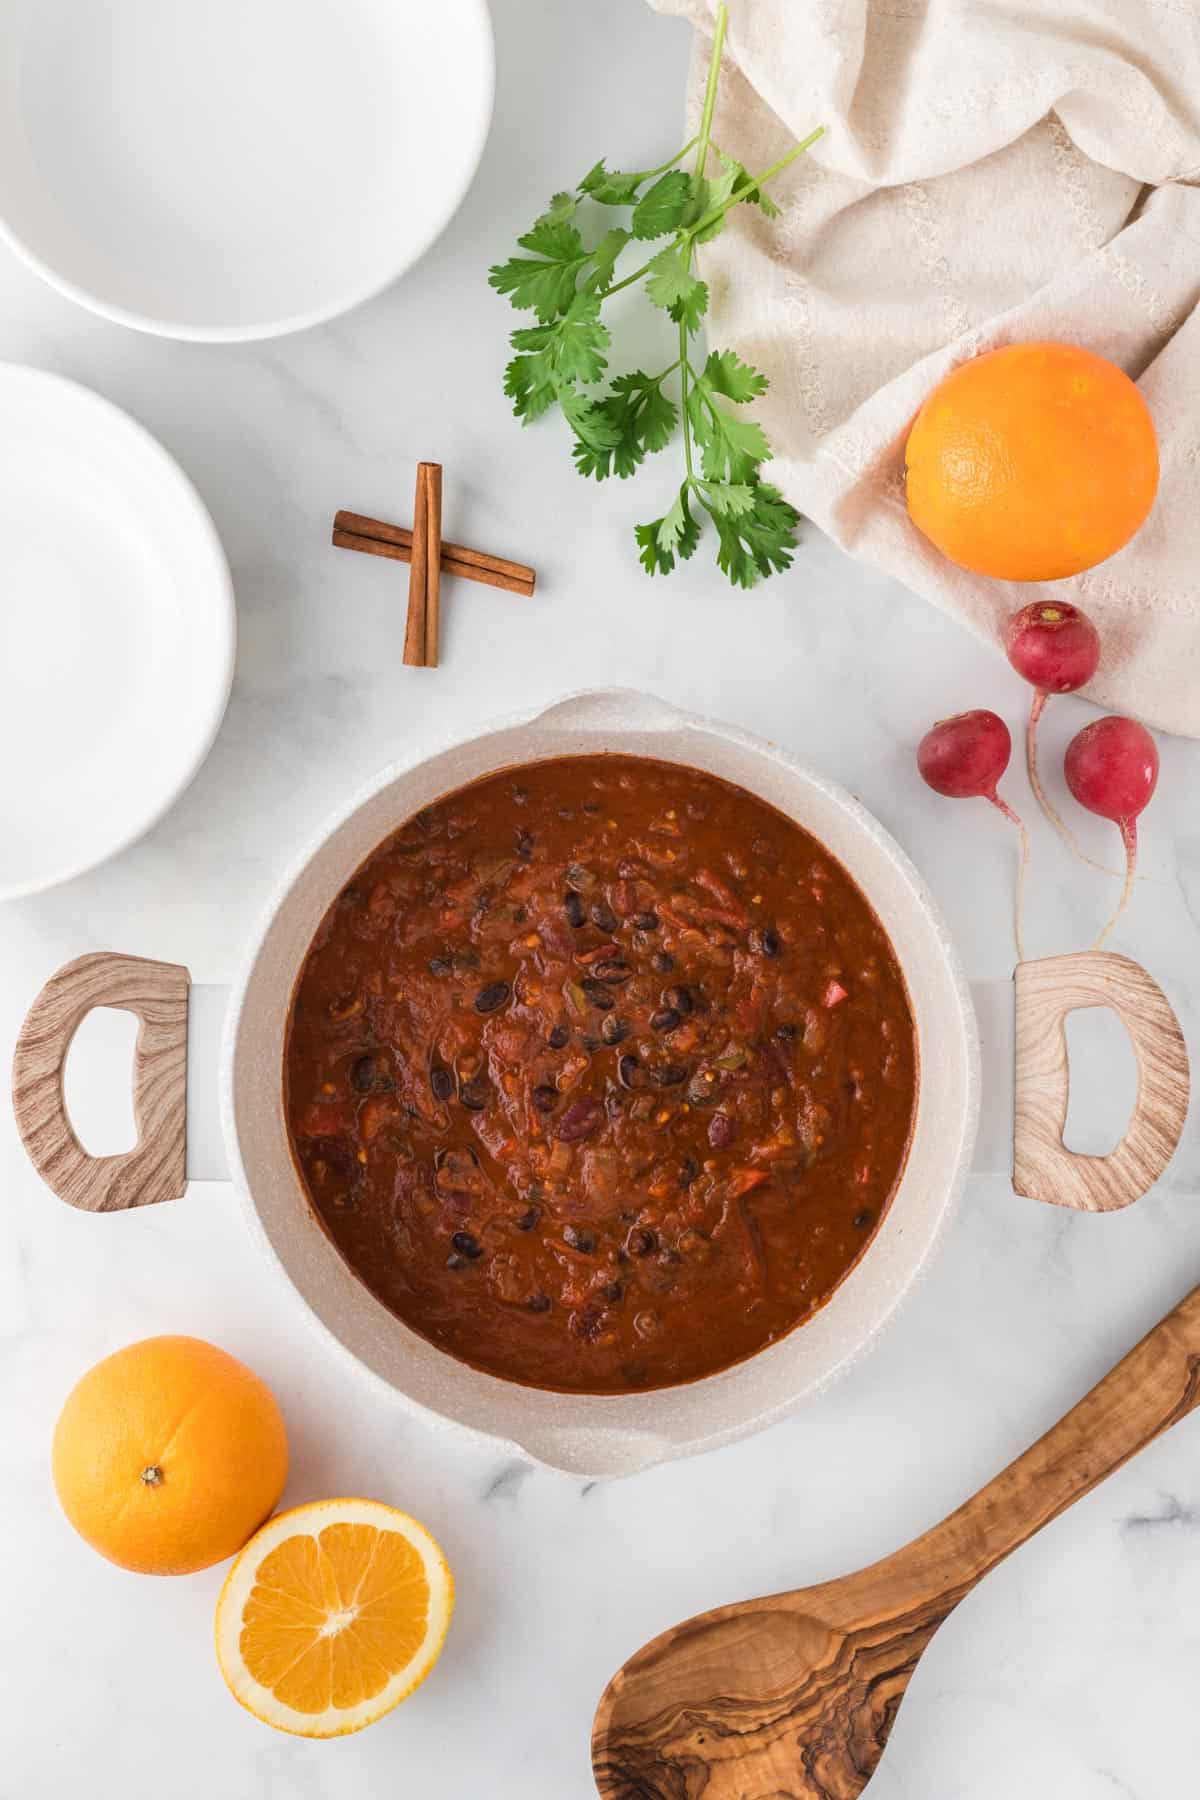 Vegan chili with orange and cinnamon in a pot